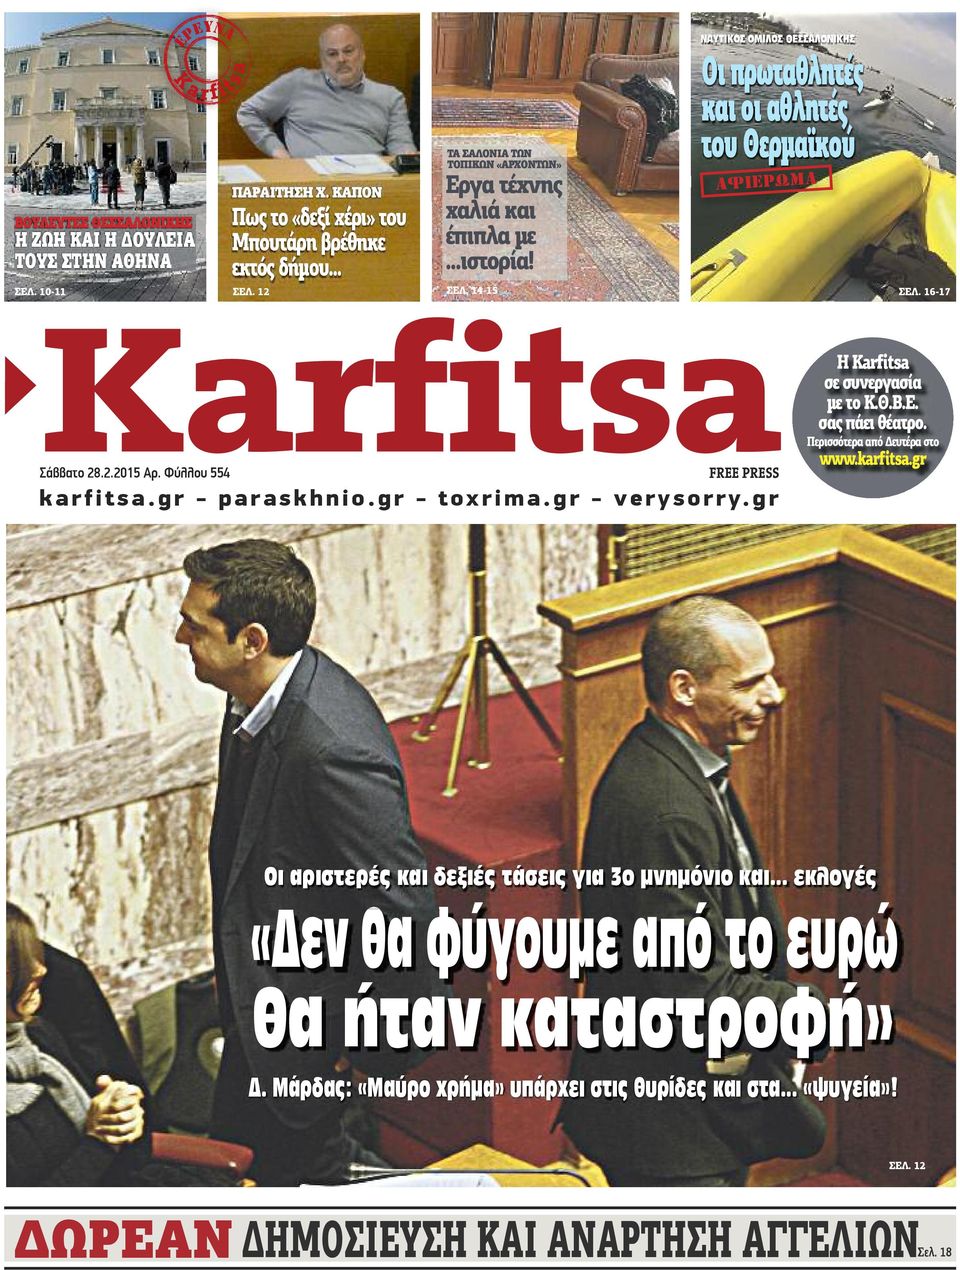 gr - verysorry.gr Η Karfitsa σε συνεργασία με το Κ.Θ.Β.Ε. σας πάει θέατρο. Περισσότερα από Δευτέρα στο www.karfitsa.gr Οι αριστερές και δεξιές τάσεις για 3ο μνημόνιο και.